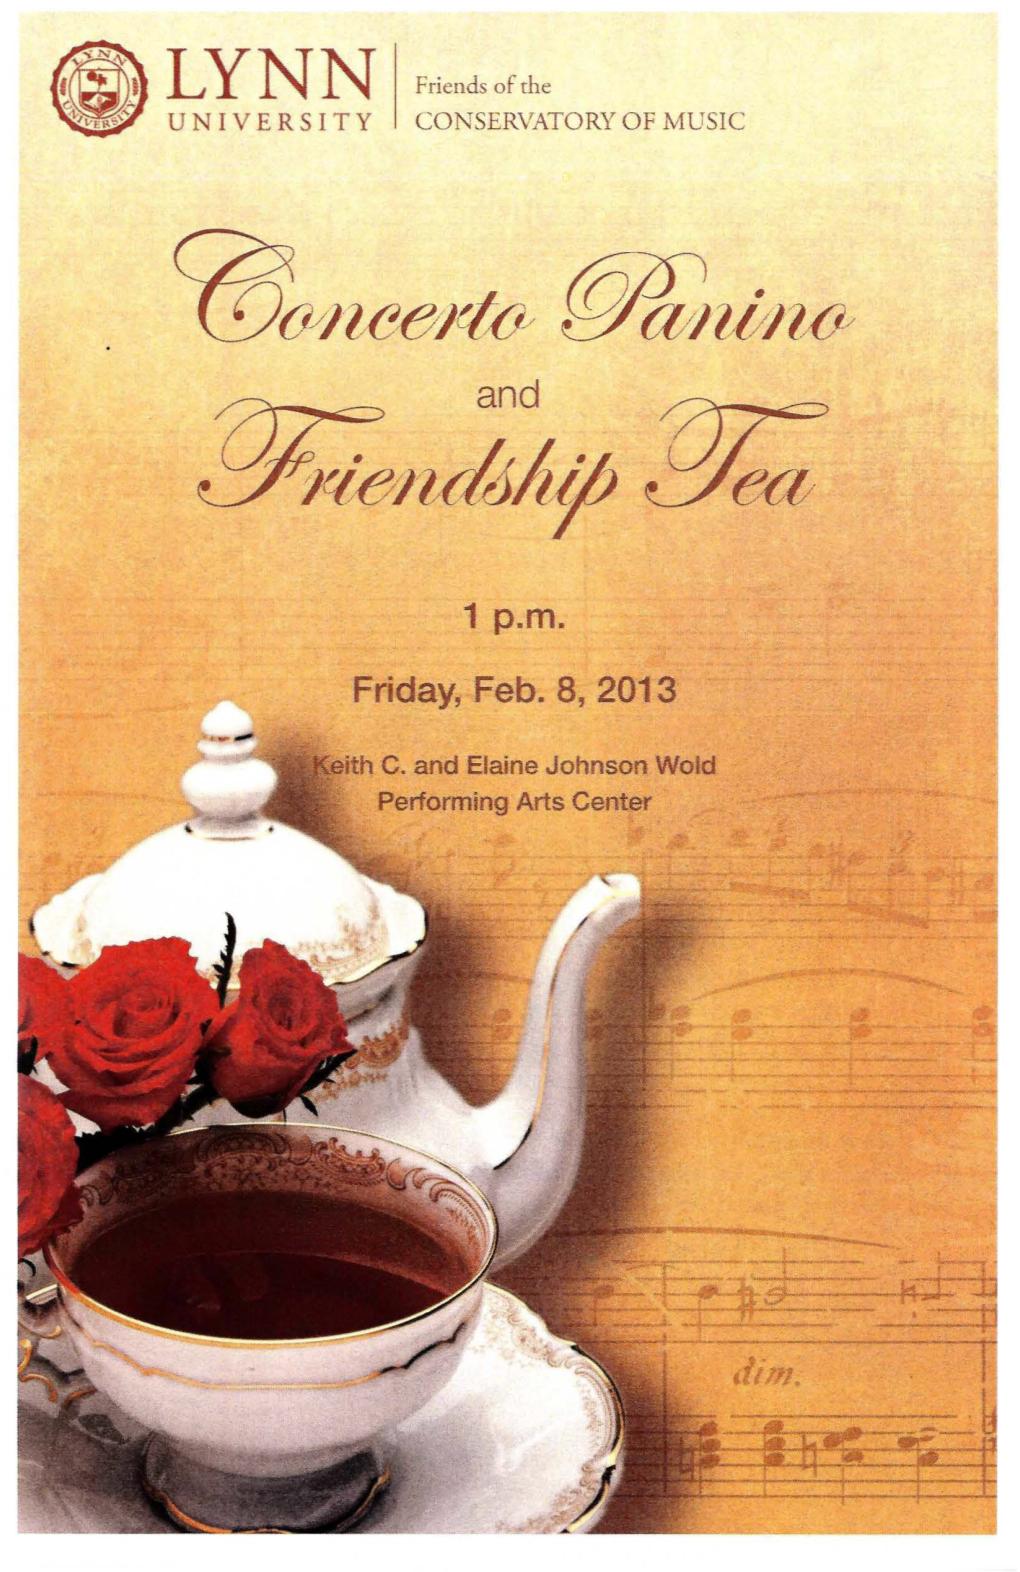 2012-2013 Concert Panino and Friendship